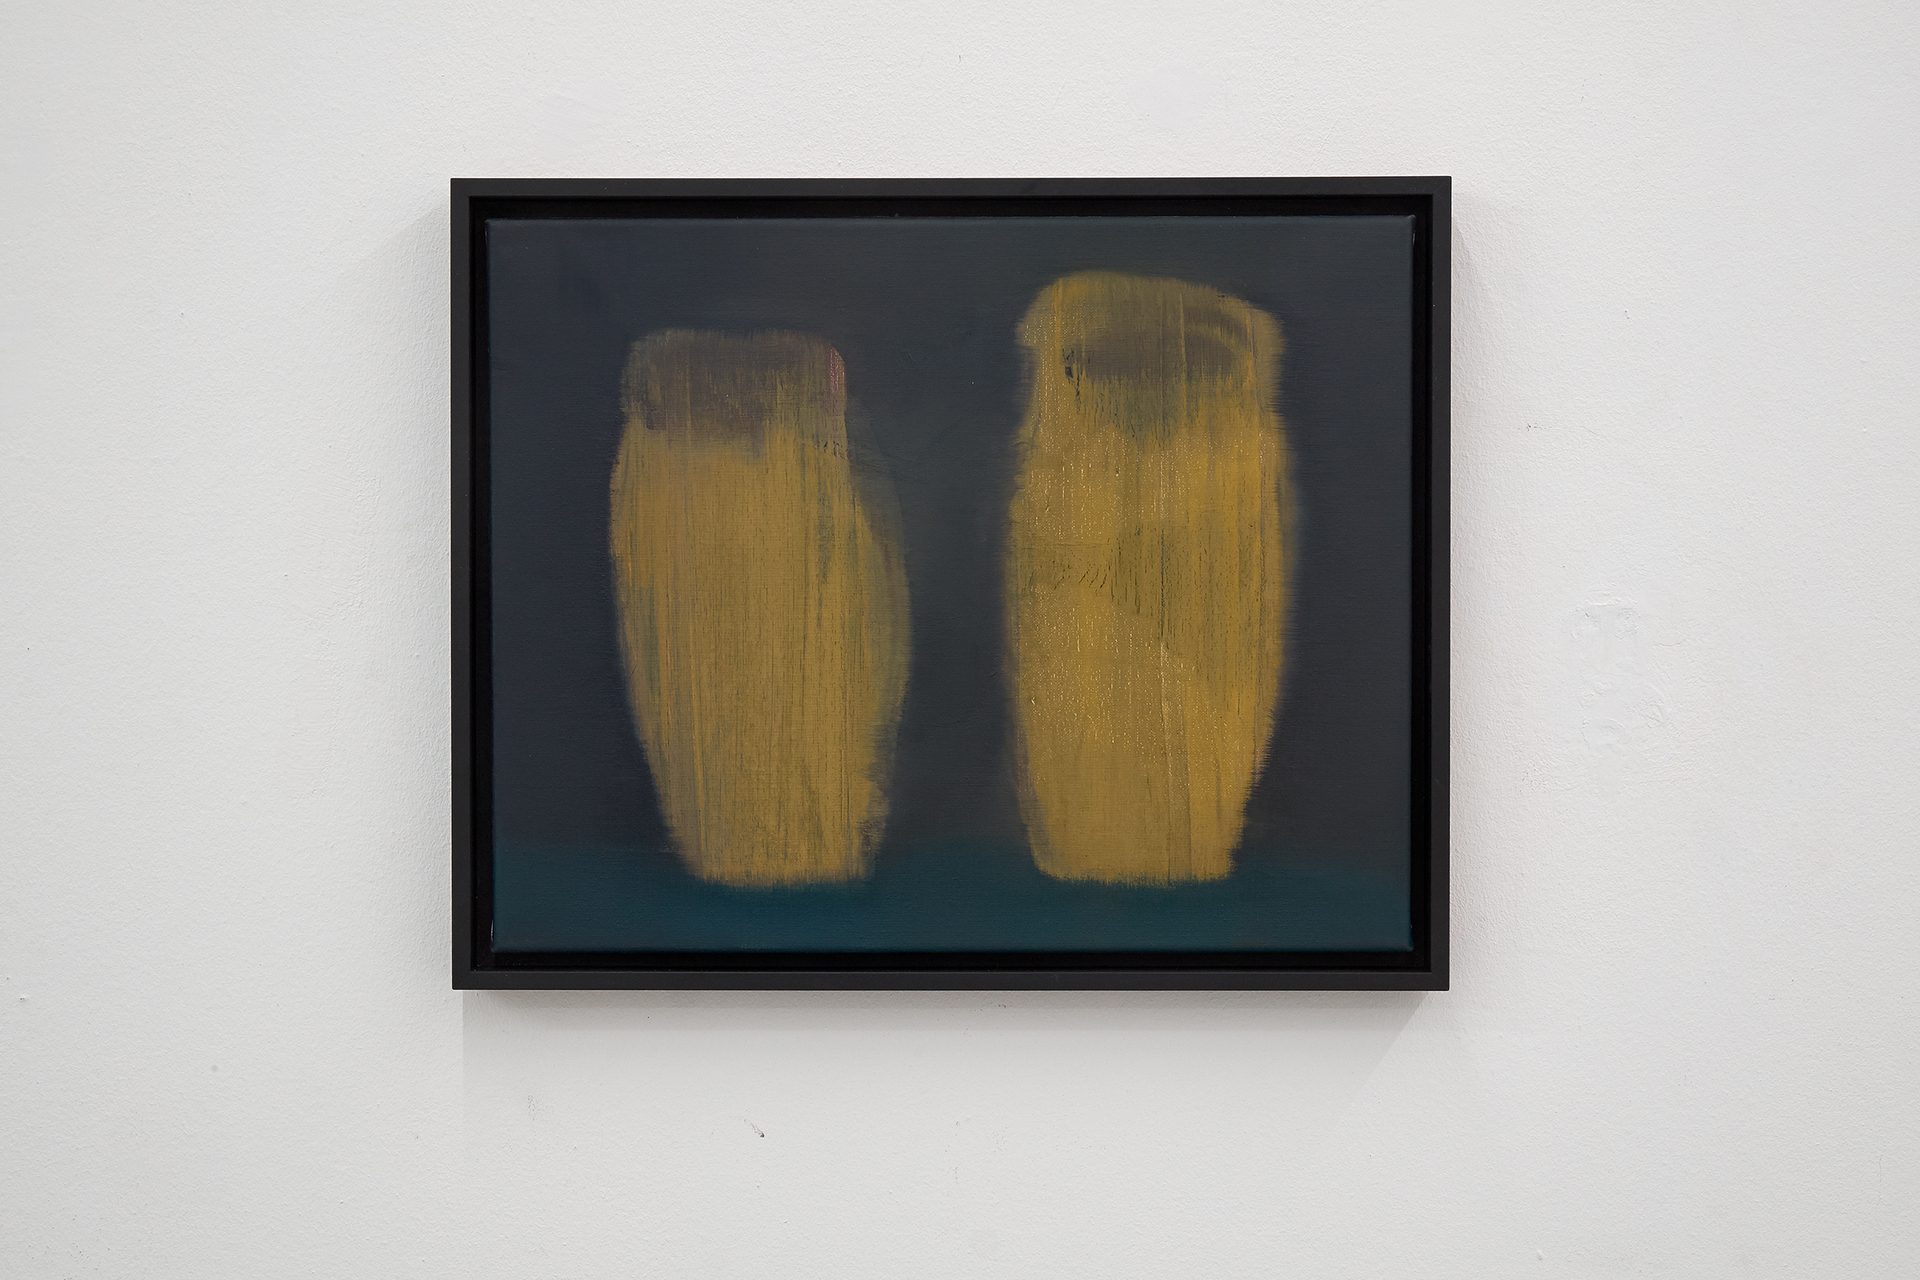 Gabriel Stoian, Missing vases, 2020, oil on canvas, 40x50cm.